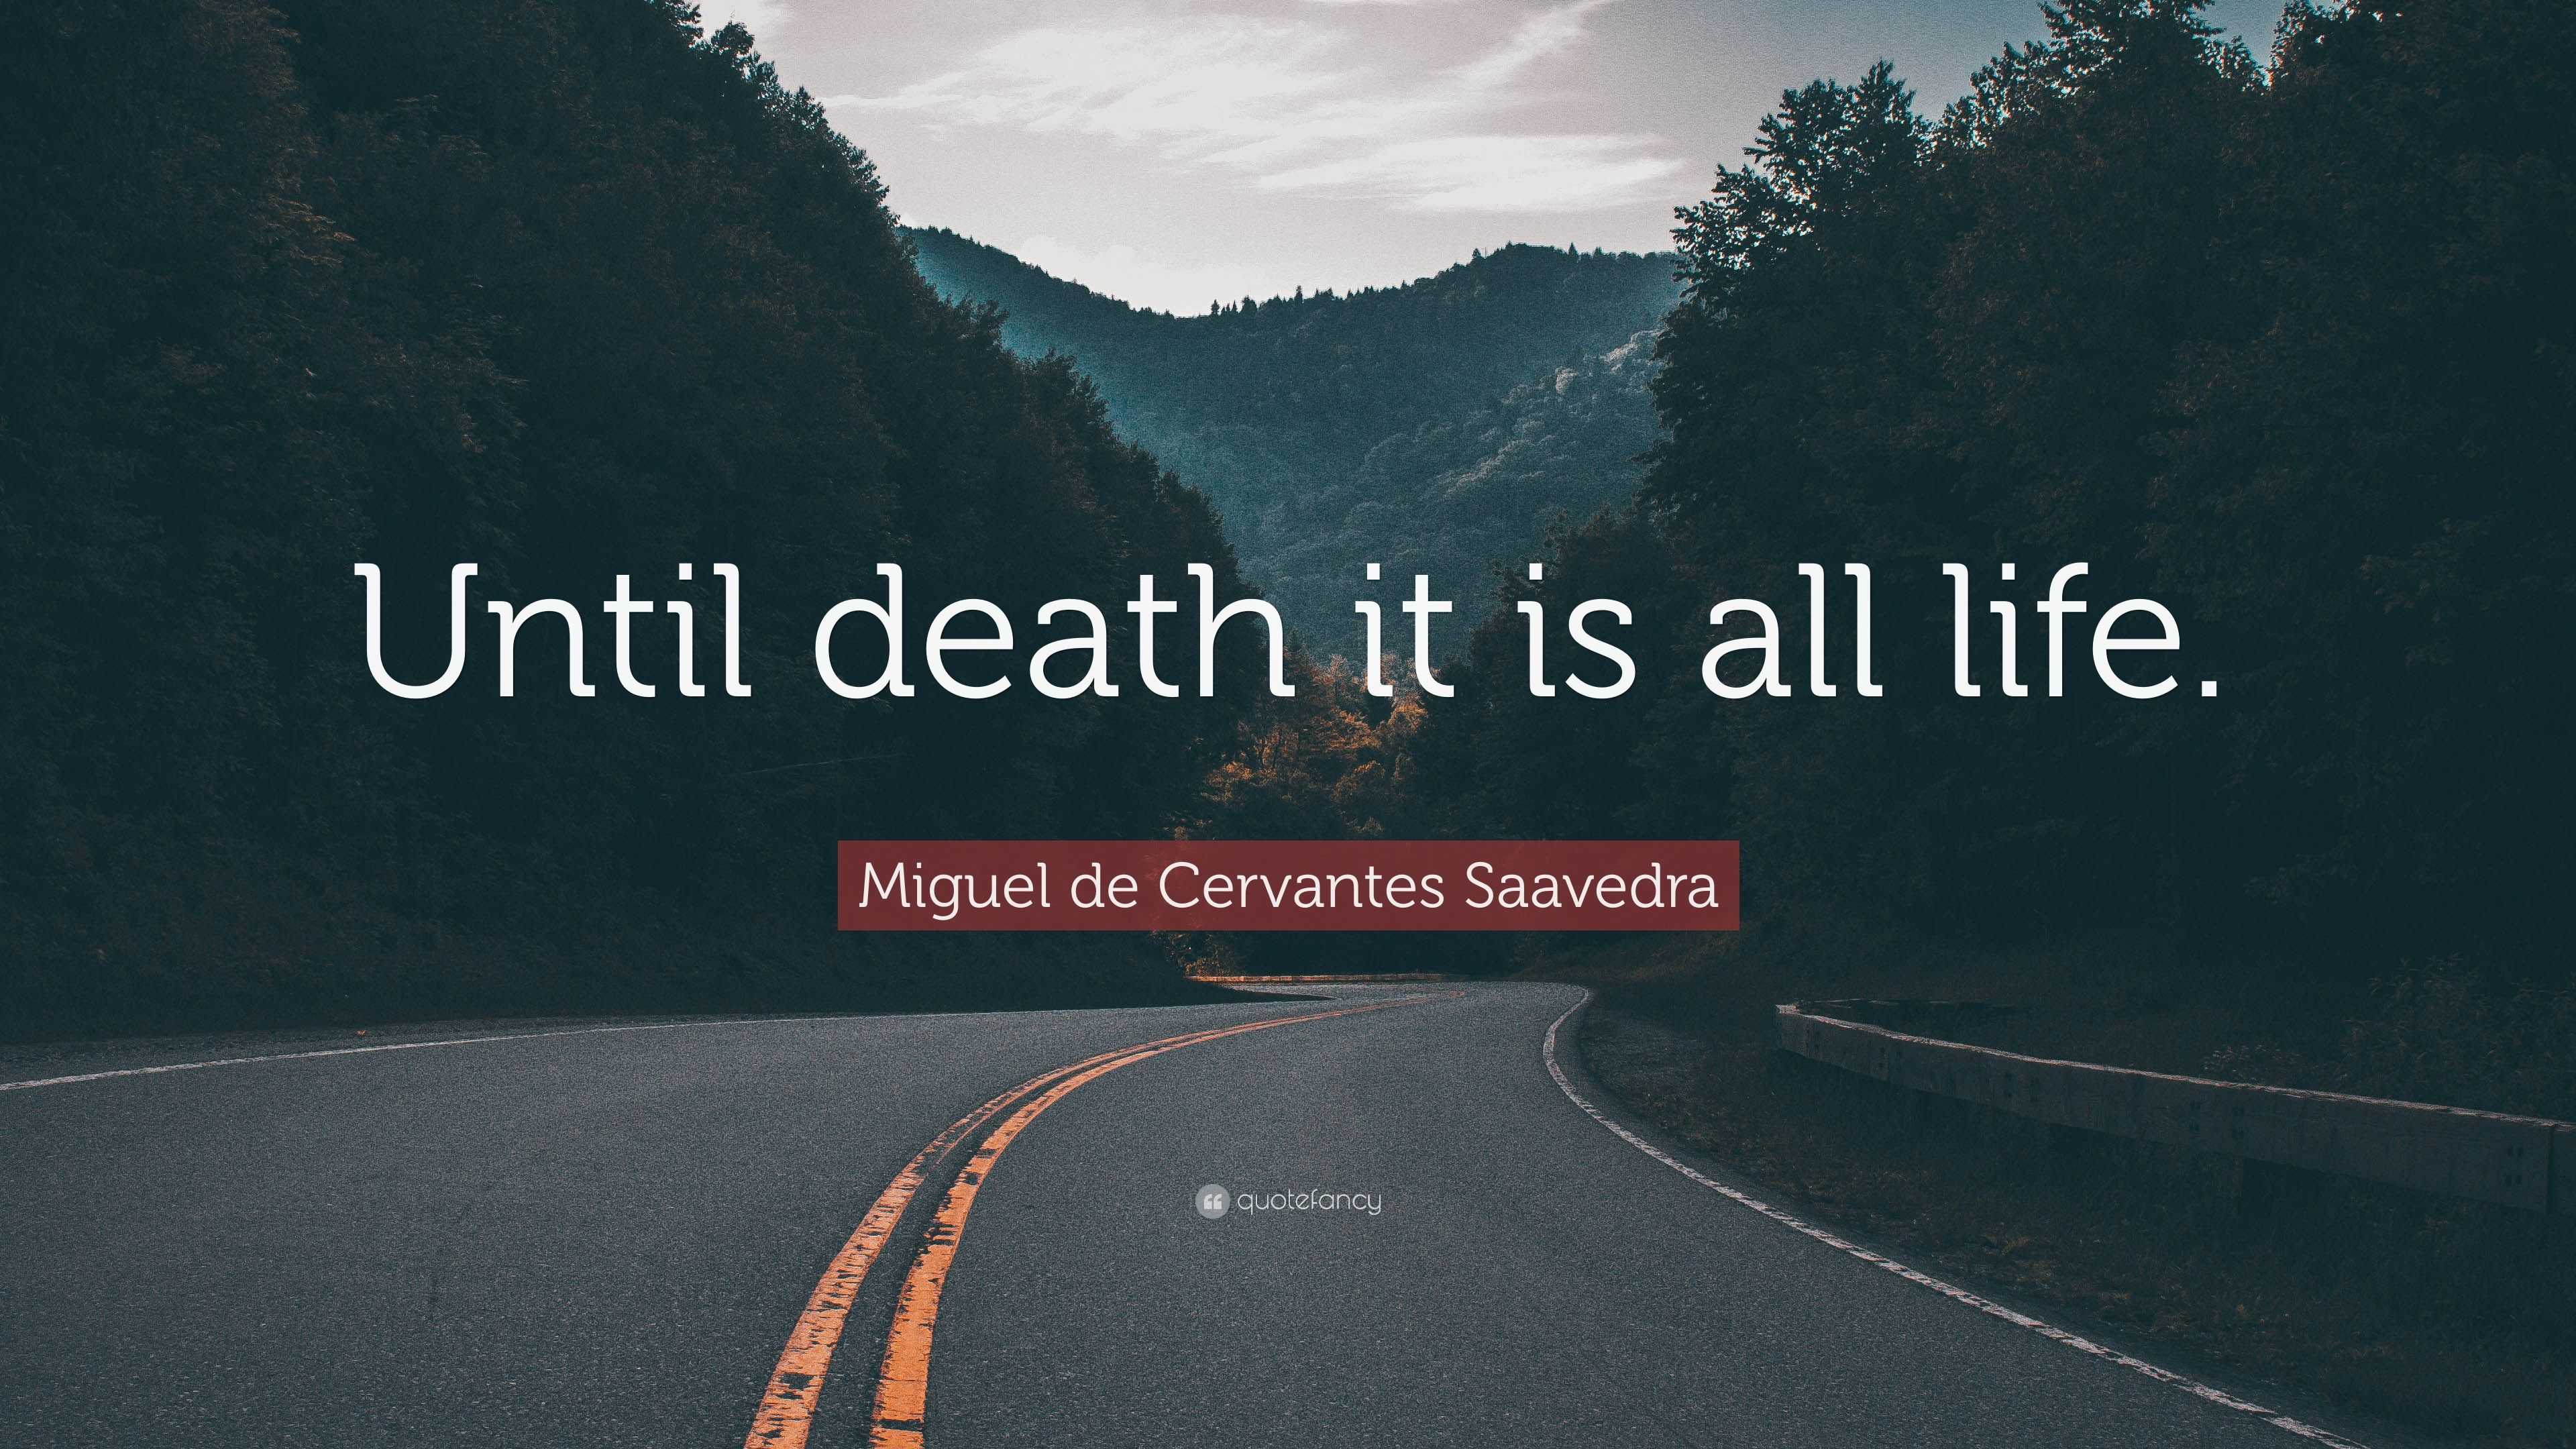 Miguel de Cervantes Saavedra Quote: “Until death it is all life.”